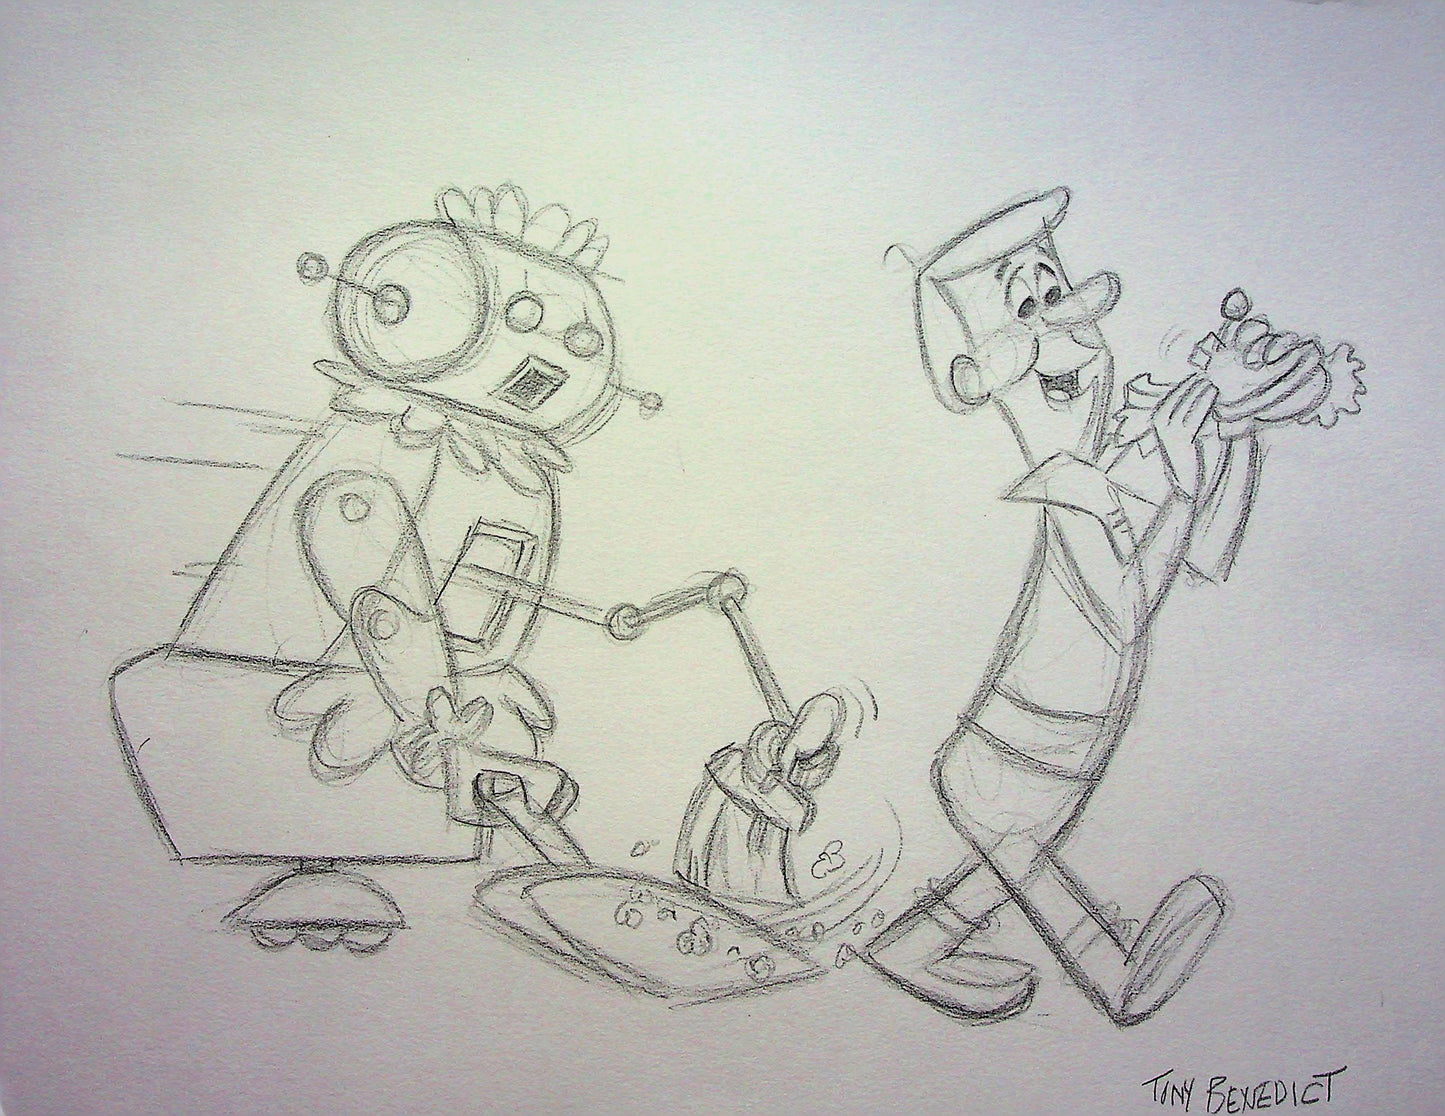 THE JETSONS Tony Benedict Signed Original Hand Drawn Animation Art 8"x11"